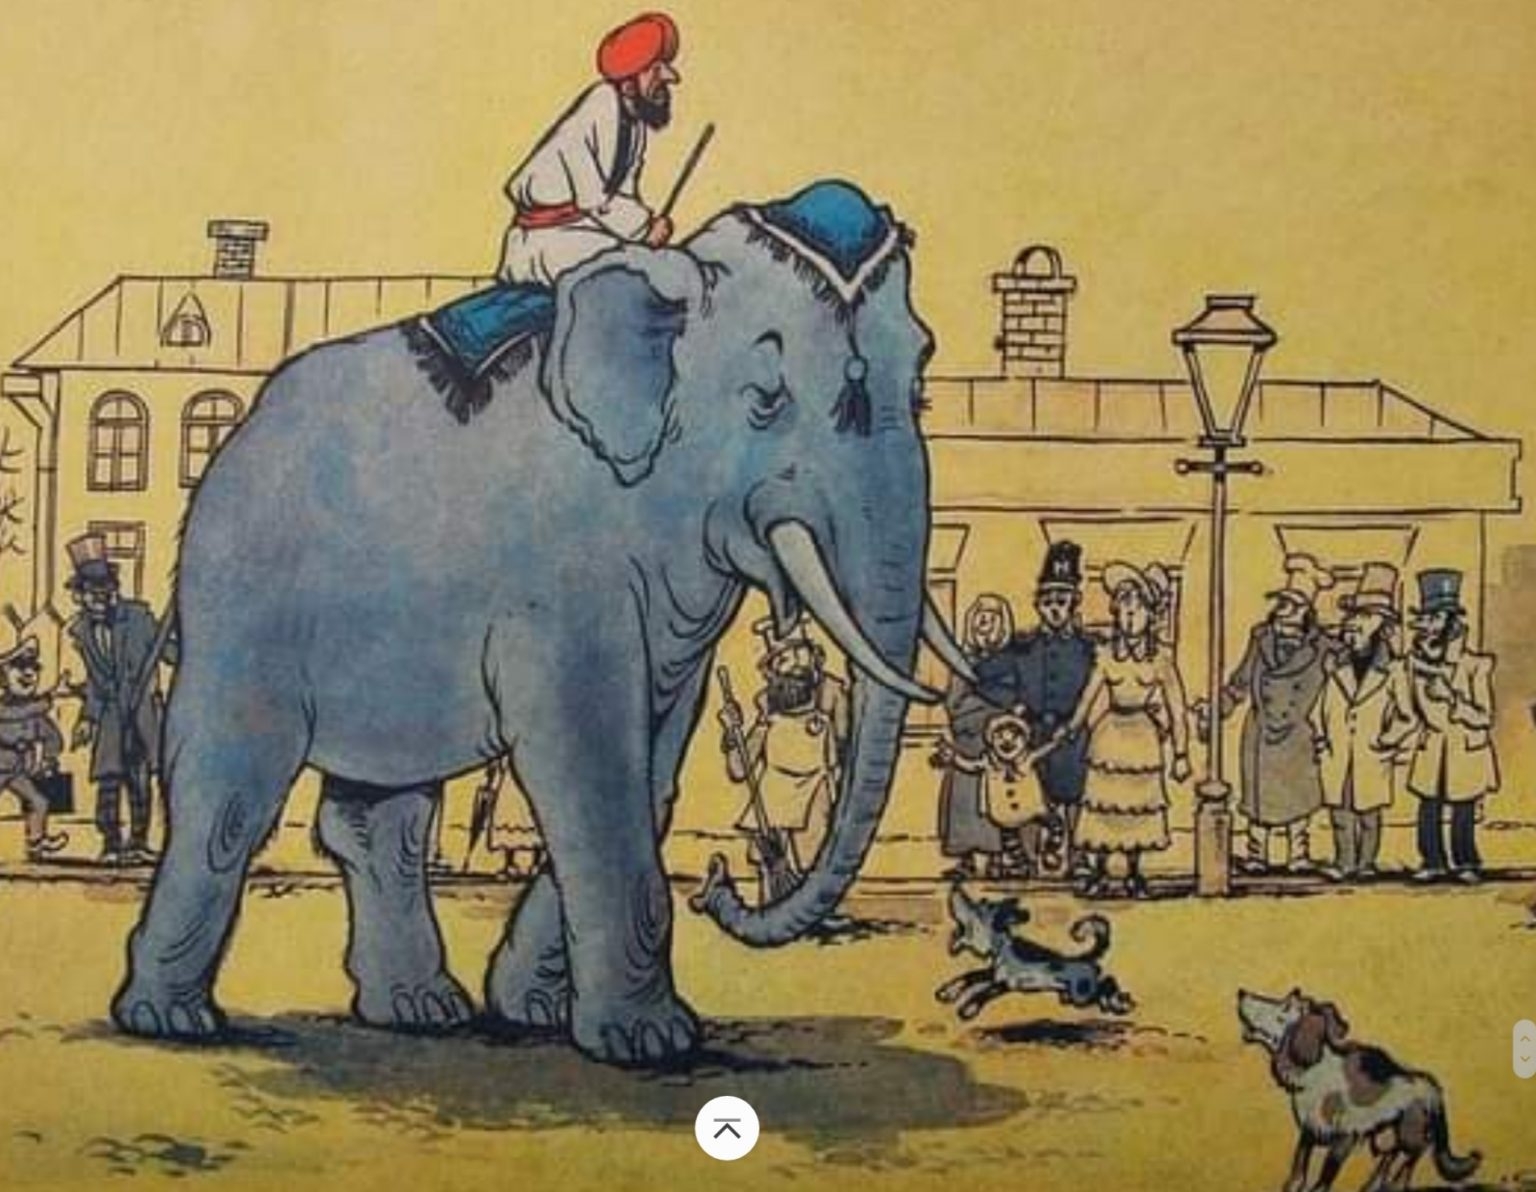 Слон и моська автор. Герои басен Крылова слон и моська. И.А. Крылов слон и моська. Слон р моська басня. Рисунок к басне Крылова слон и моська.